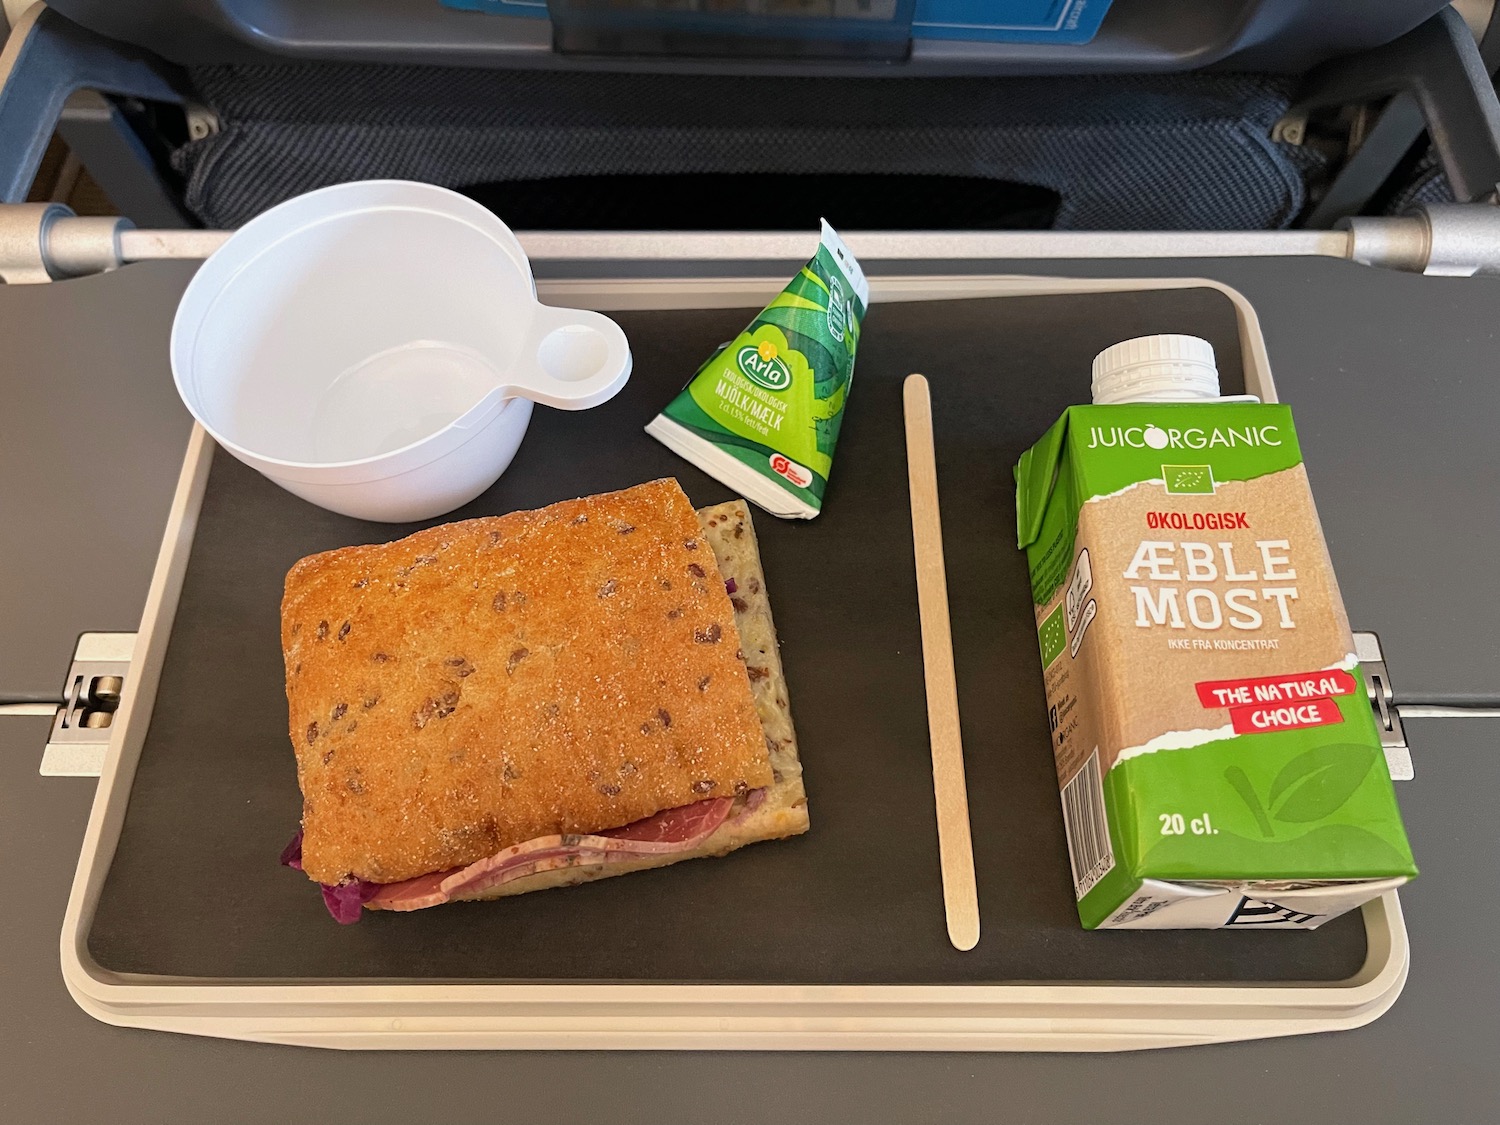 a sandwich and milk carton on a tray